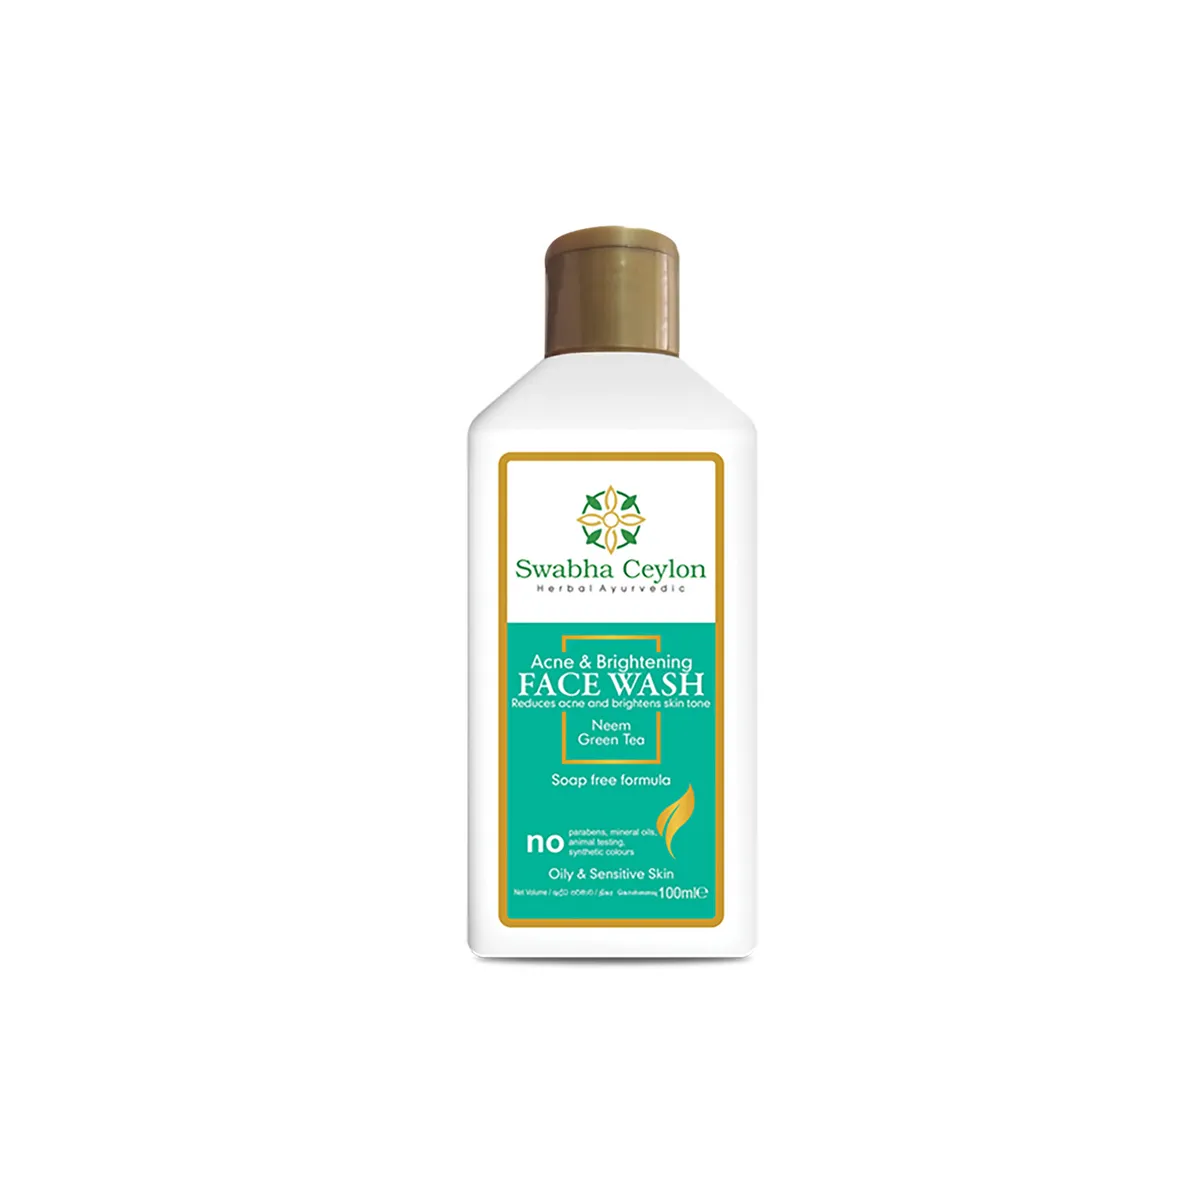 First product image of Swabha Ceylon Acne & Brightening Face Wash 100ml